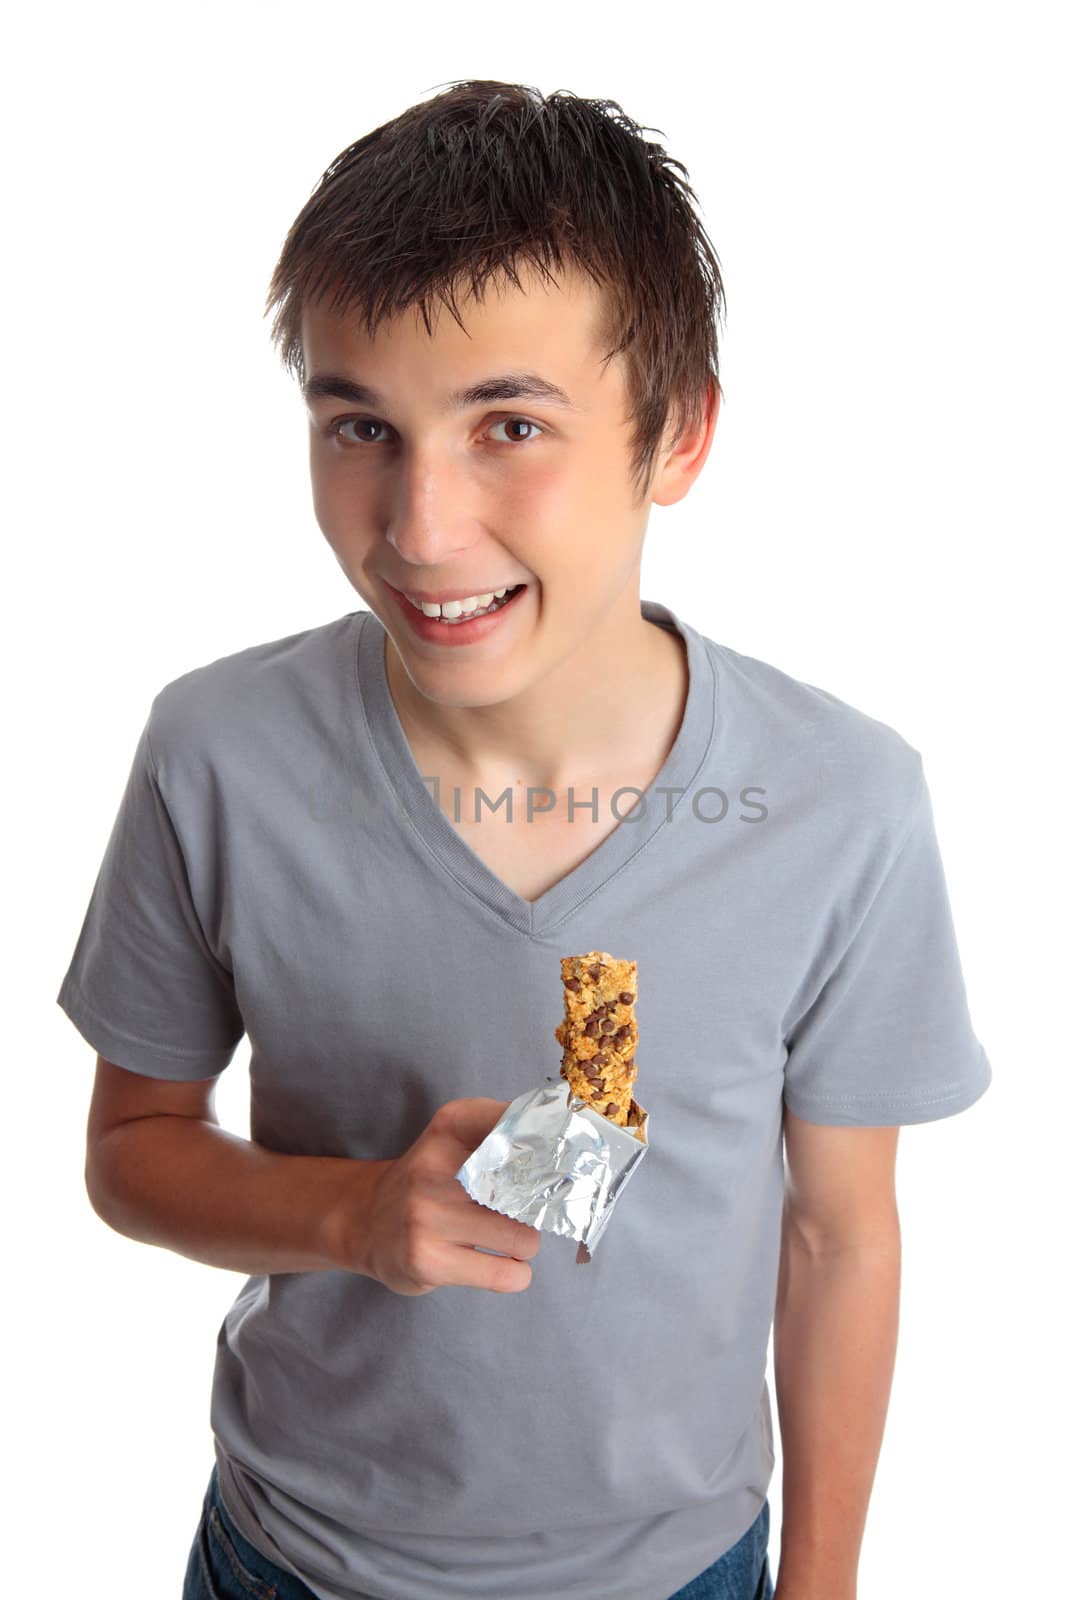 A smiling boy holding a healthy muesli bar snack.